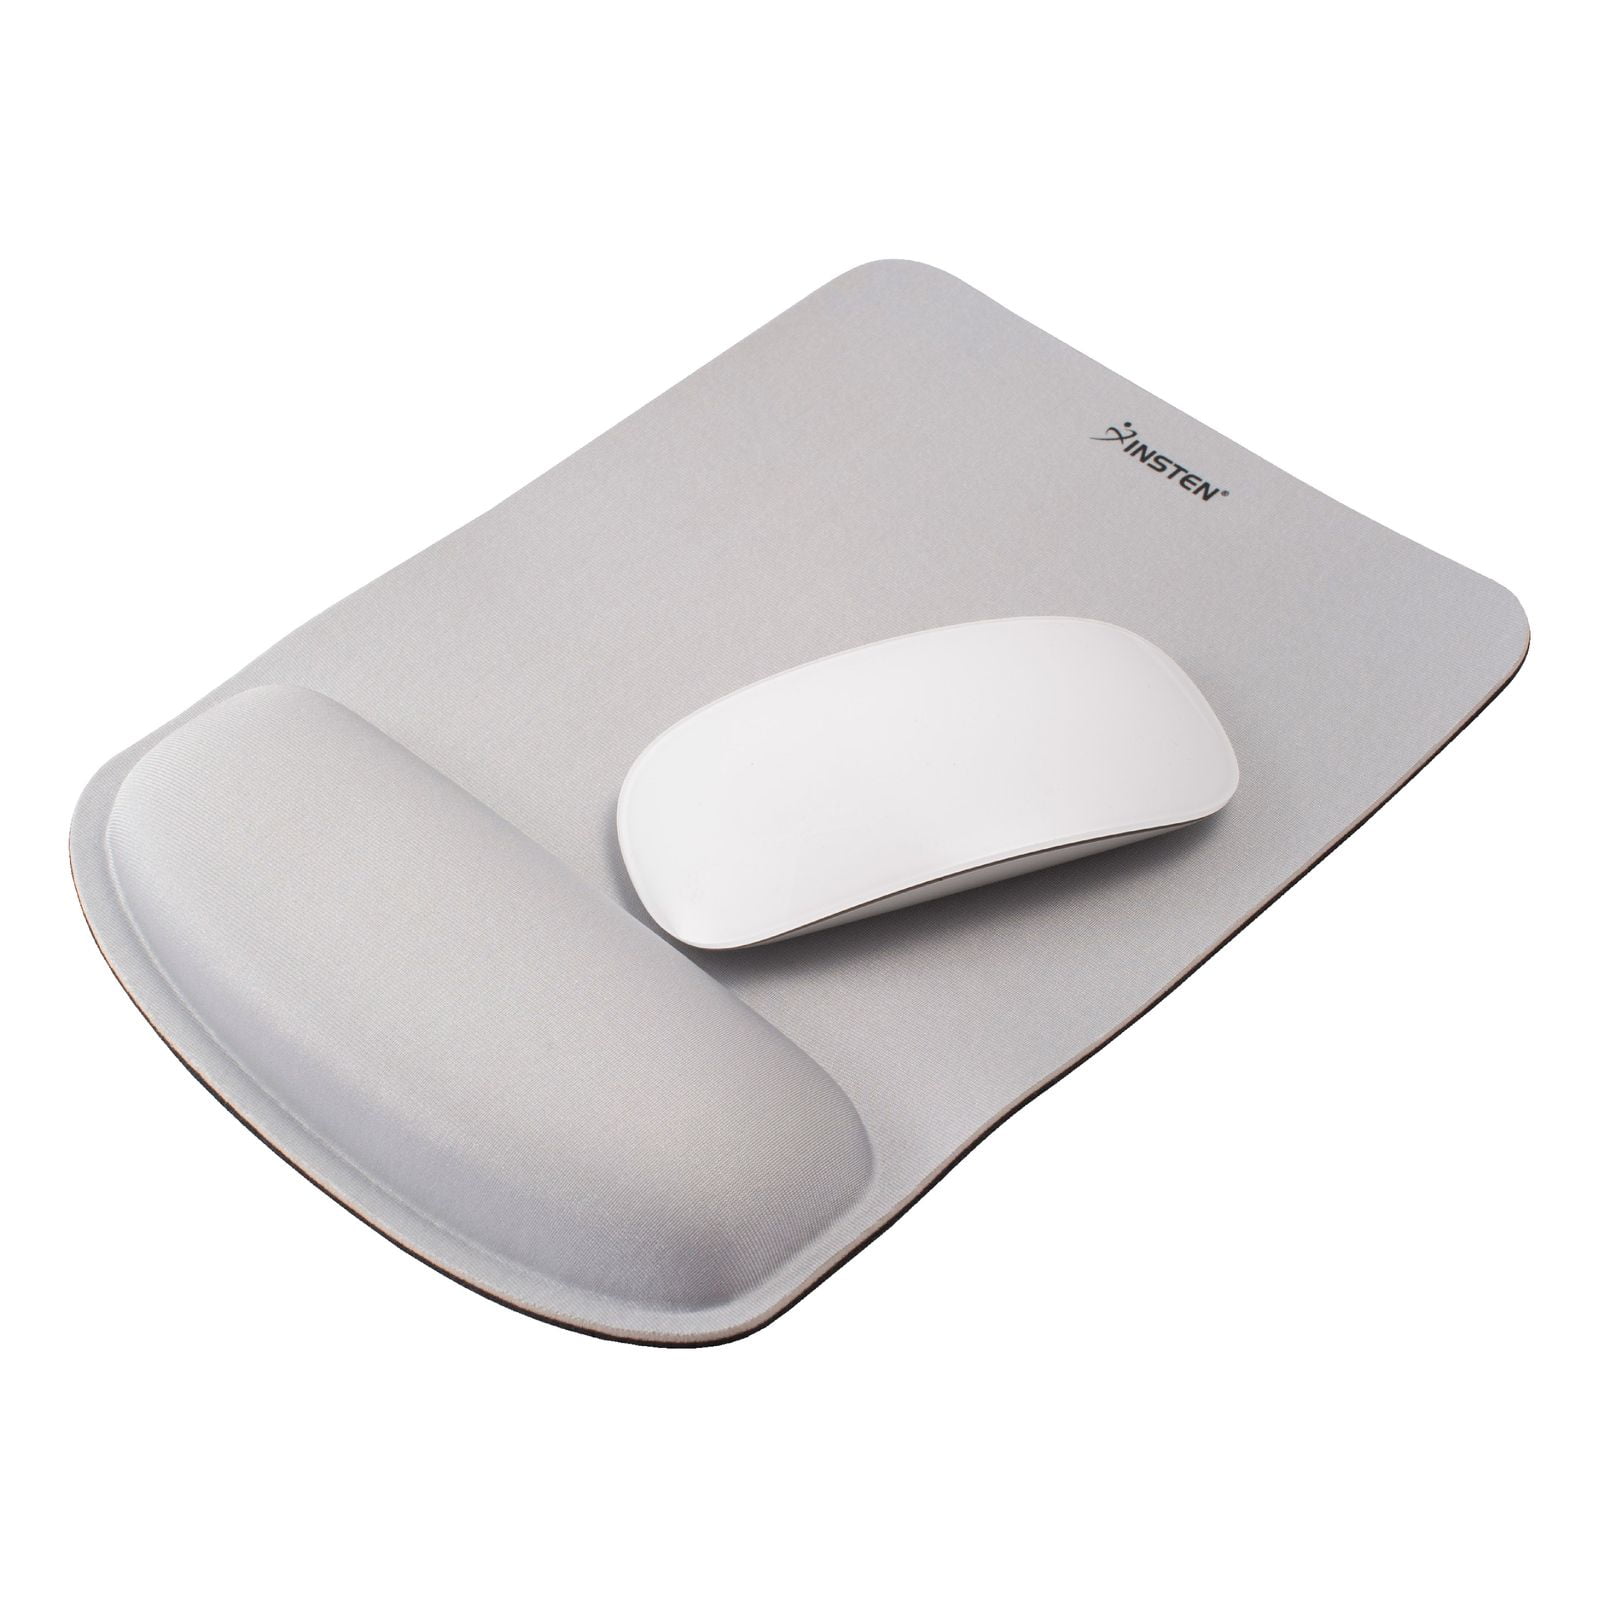 Fellowes Memory Foam Mouse Pad/Wrist Rest- Silver